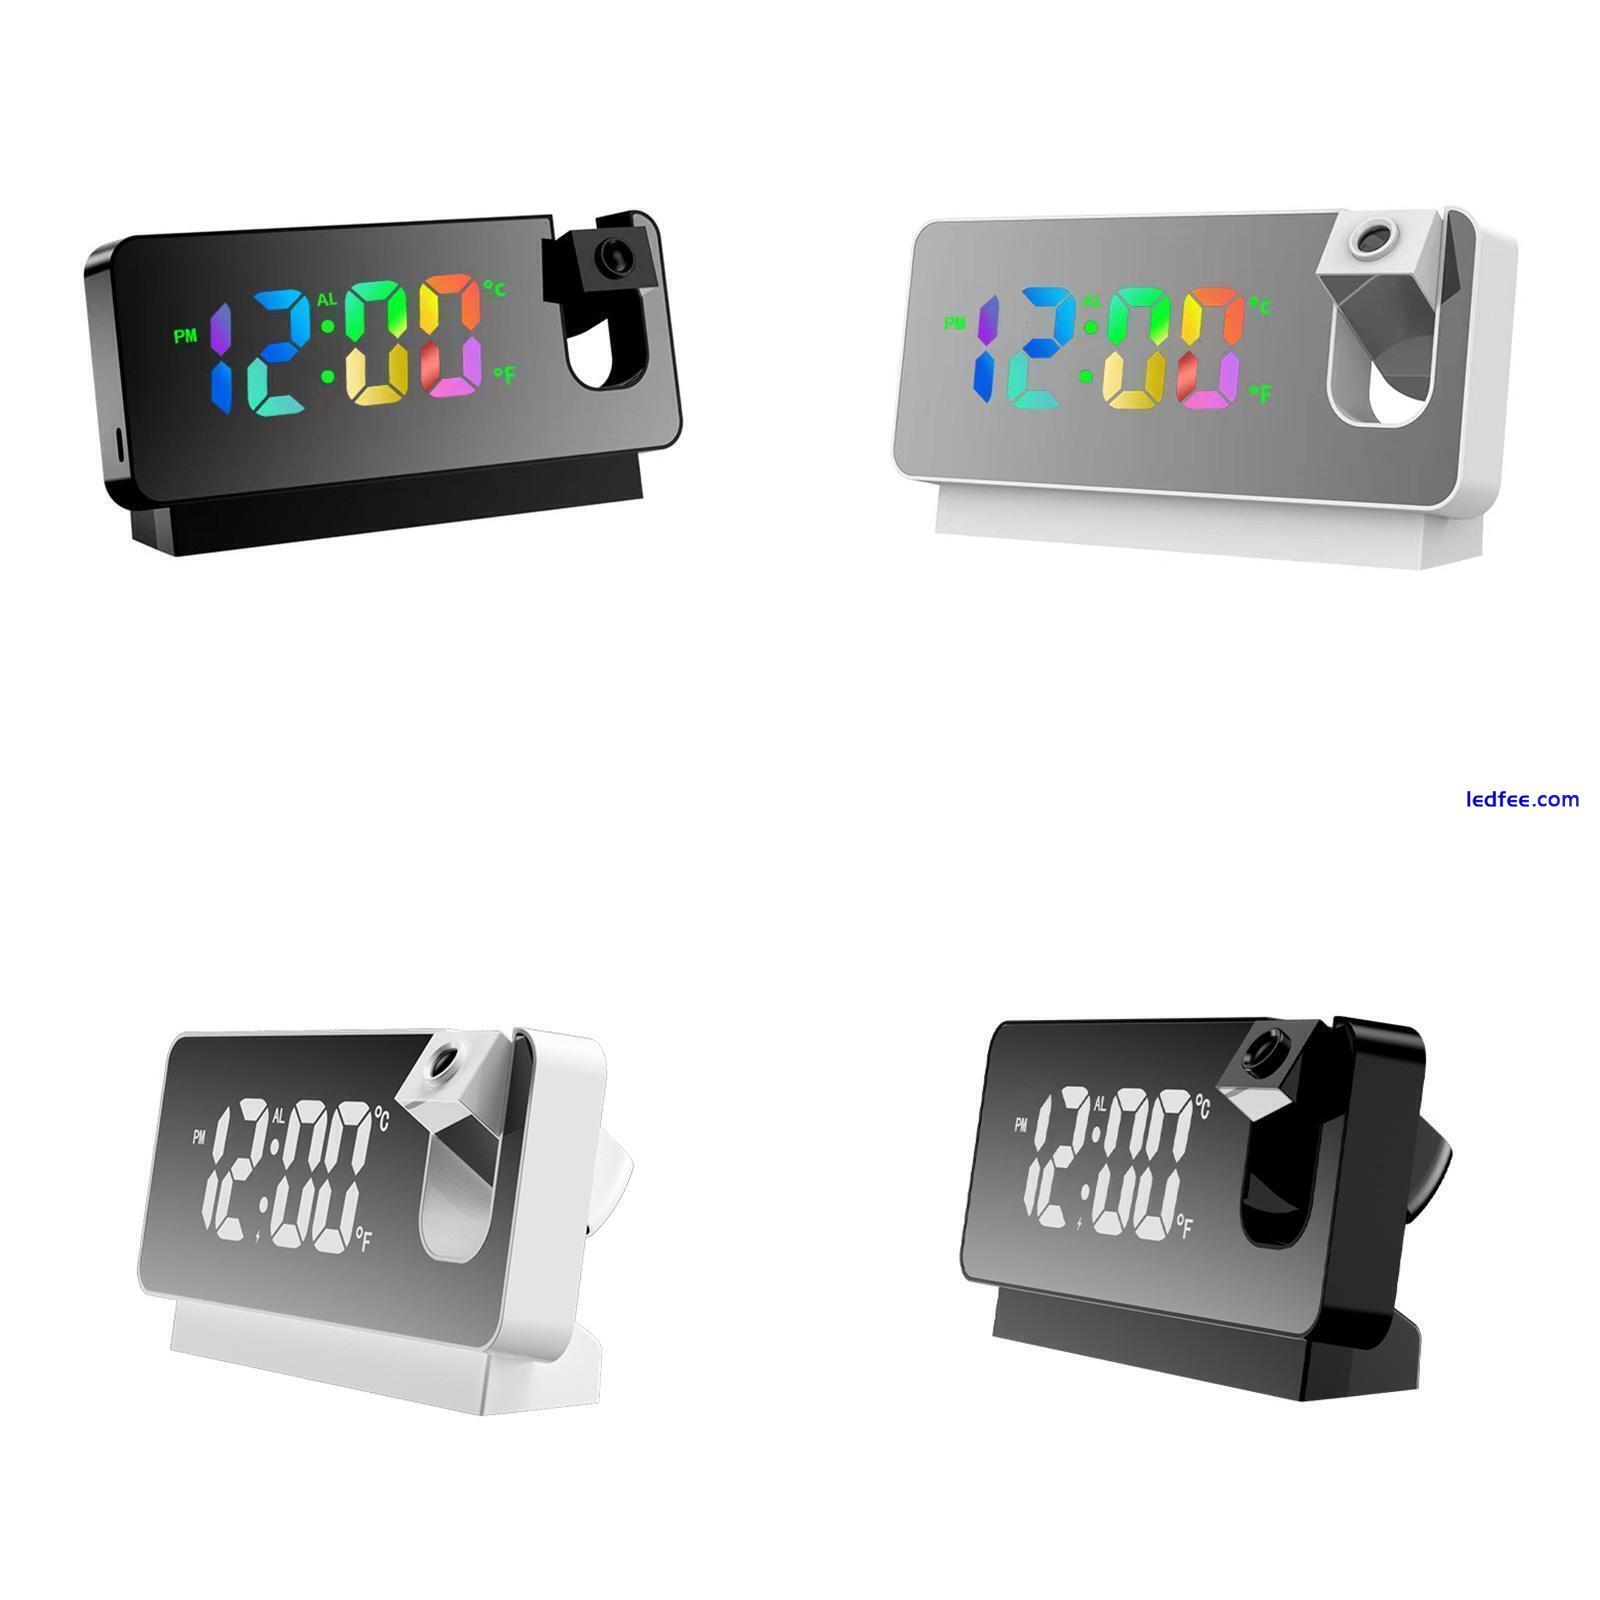 LED Alarm Wecker mit Projektion Digital Spiegel USB Snooze Alarmwecker T5L1 G5V1 1 